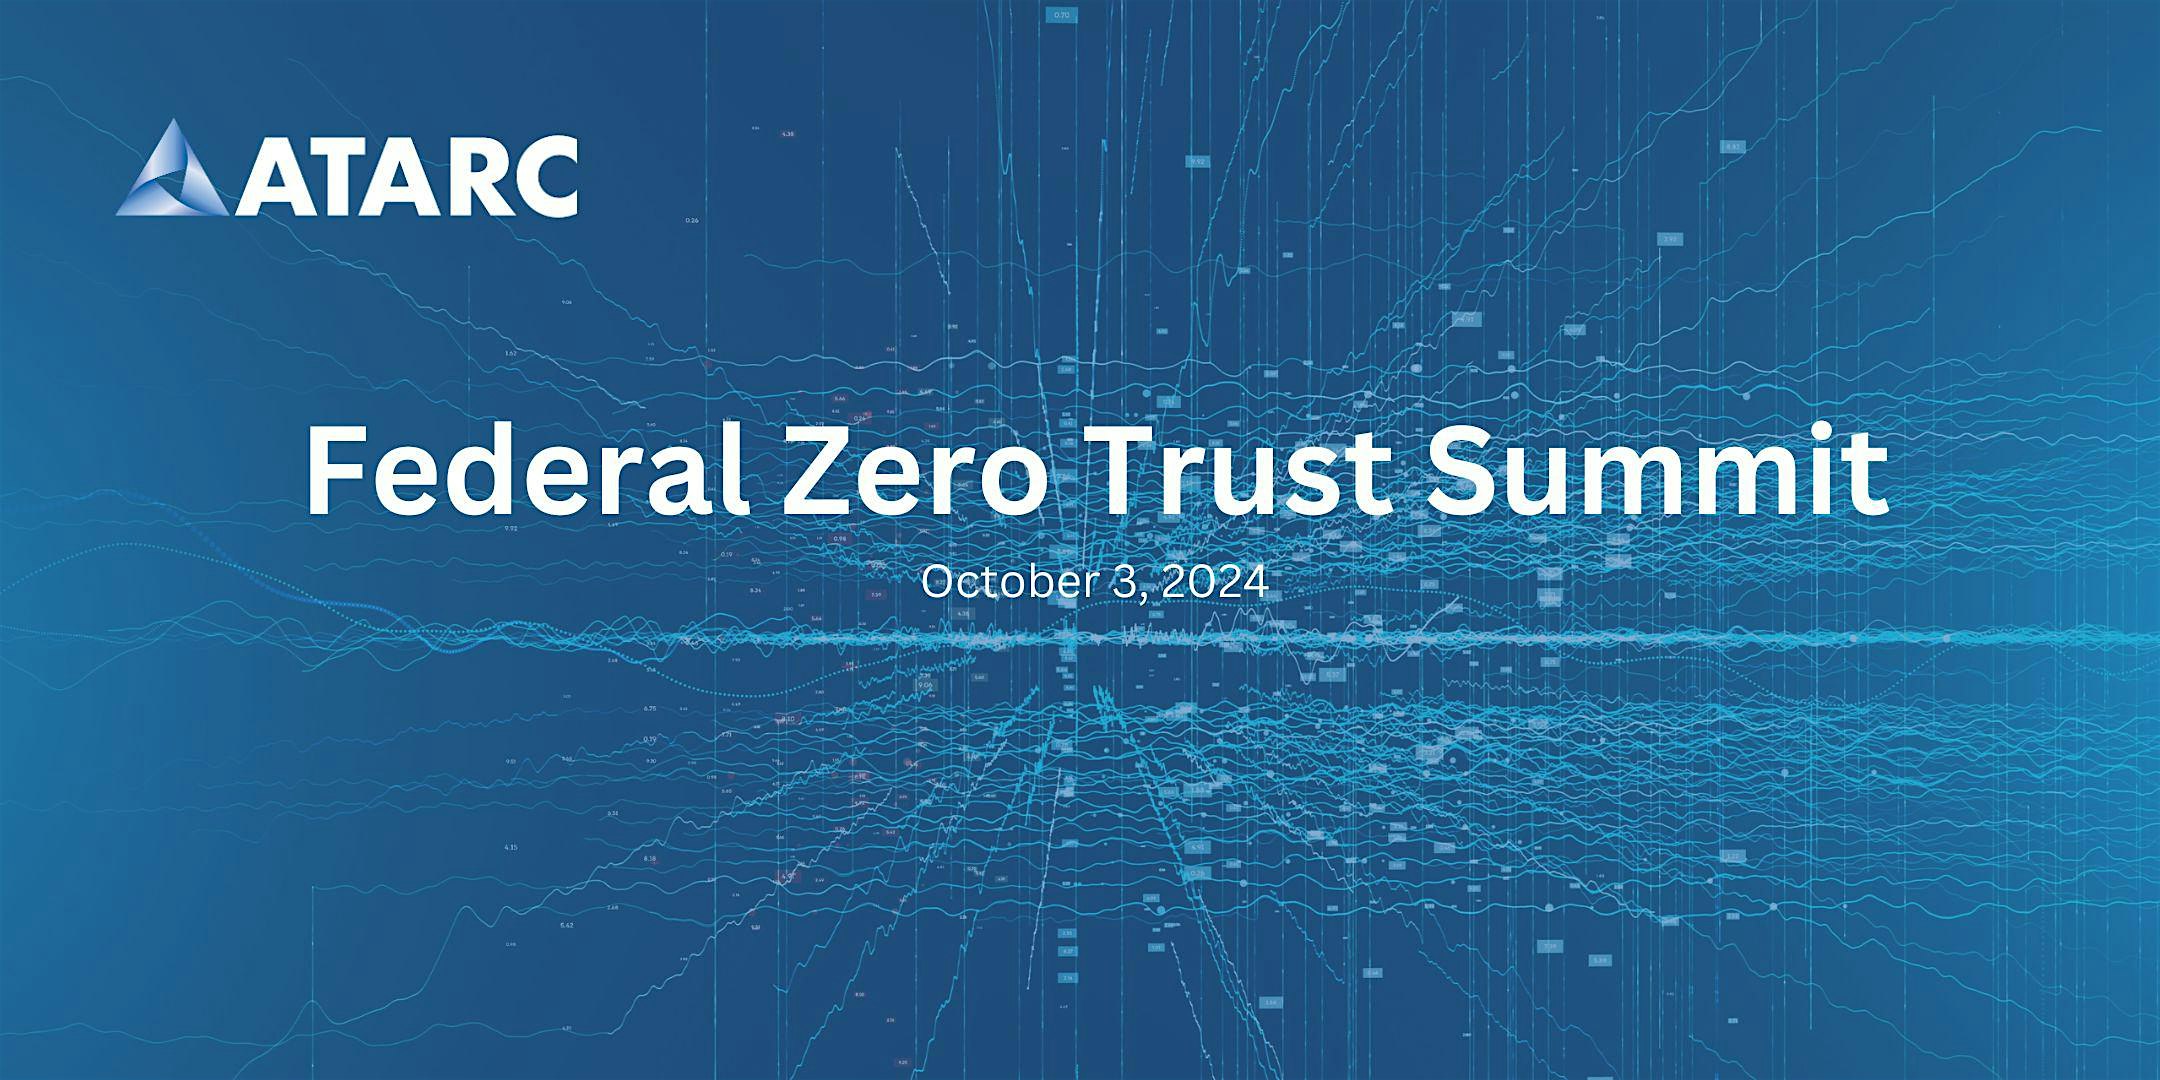 ATARC's Federal Zero Trust Summit